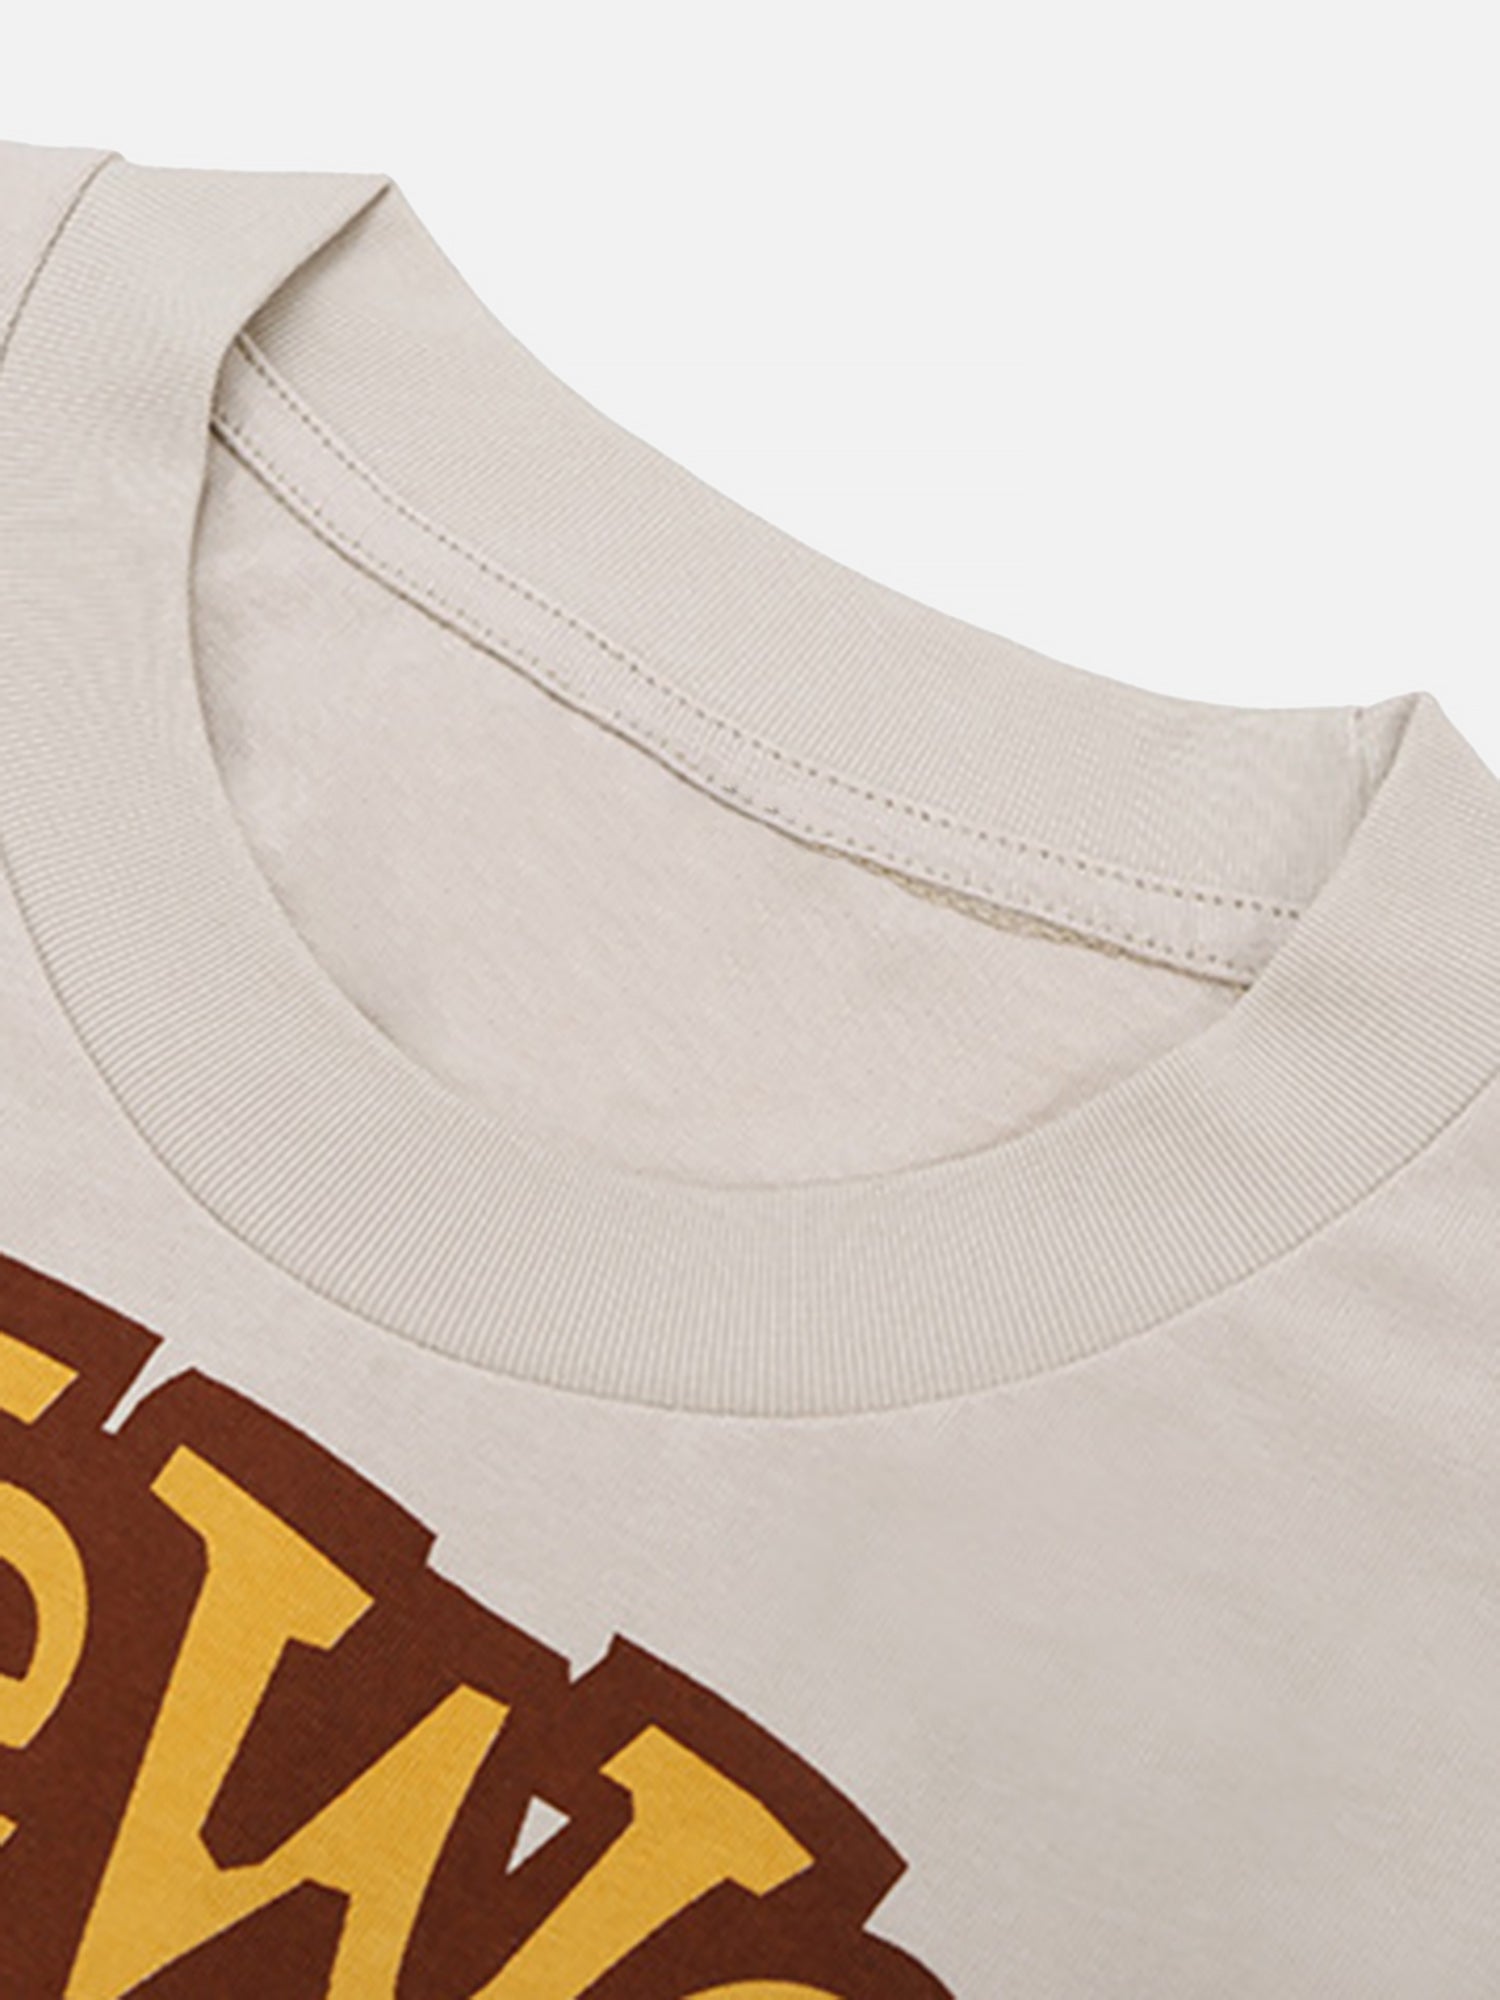 Thesupermade Bear Letter Print Hip Hop Short Sleeve T-shirt